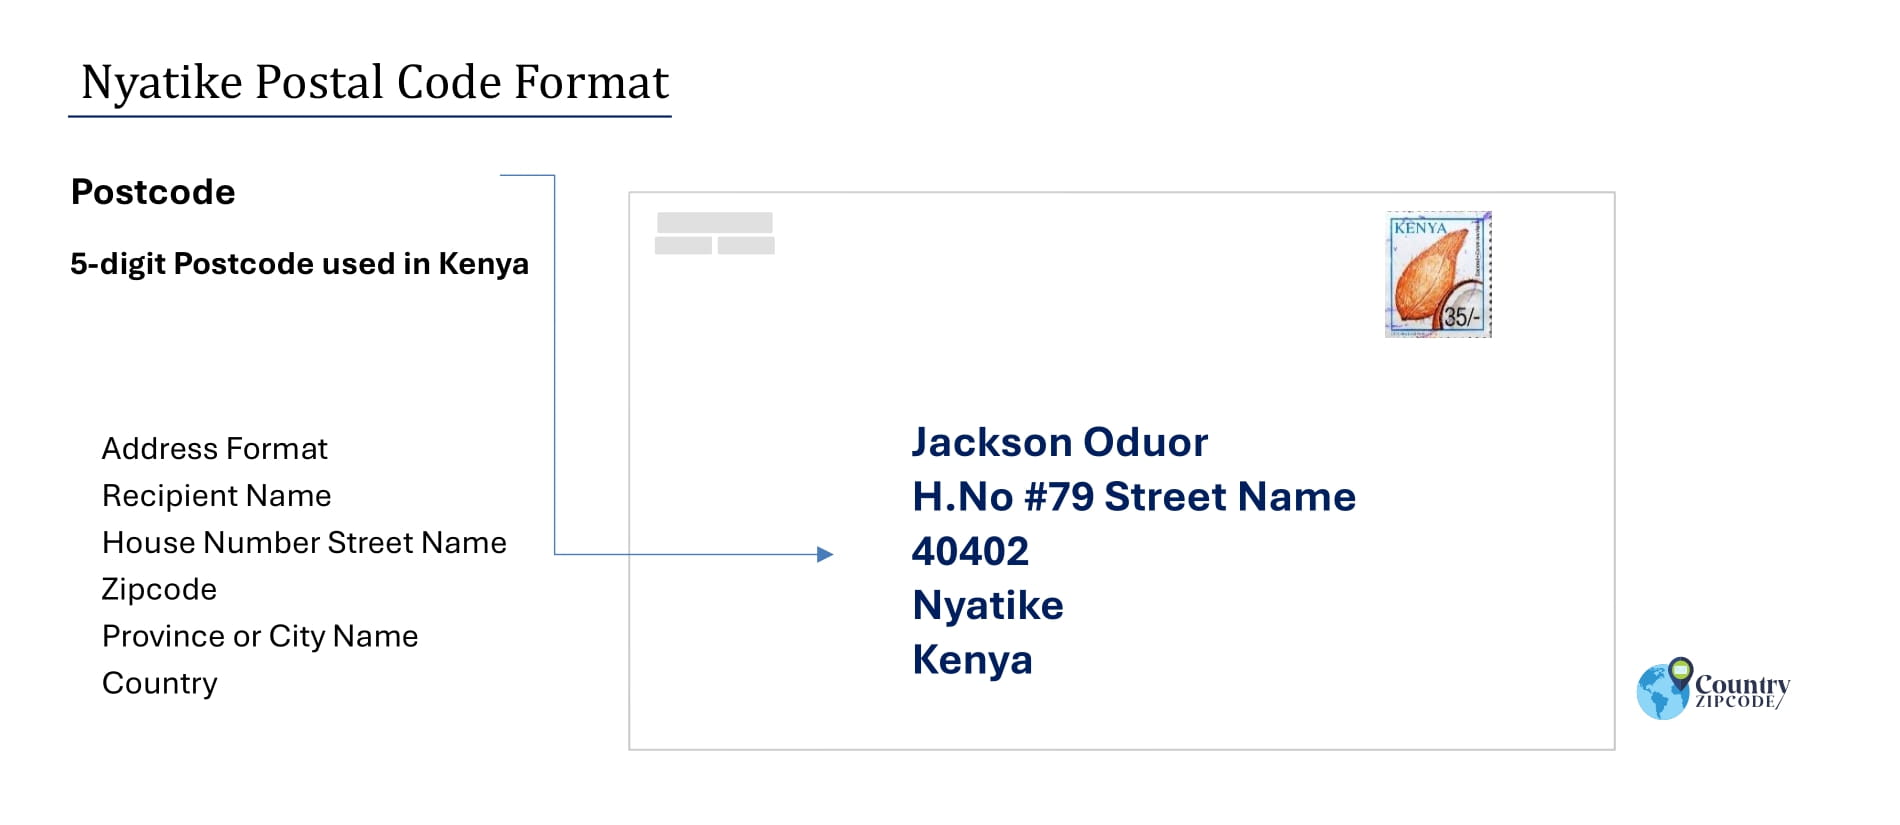 Example of Nyatike Address and postal code format